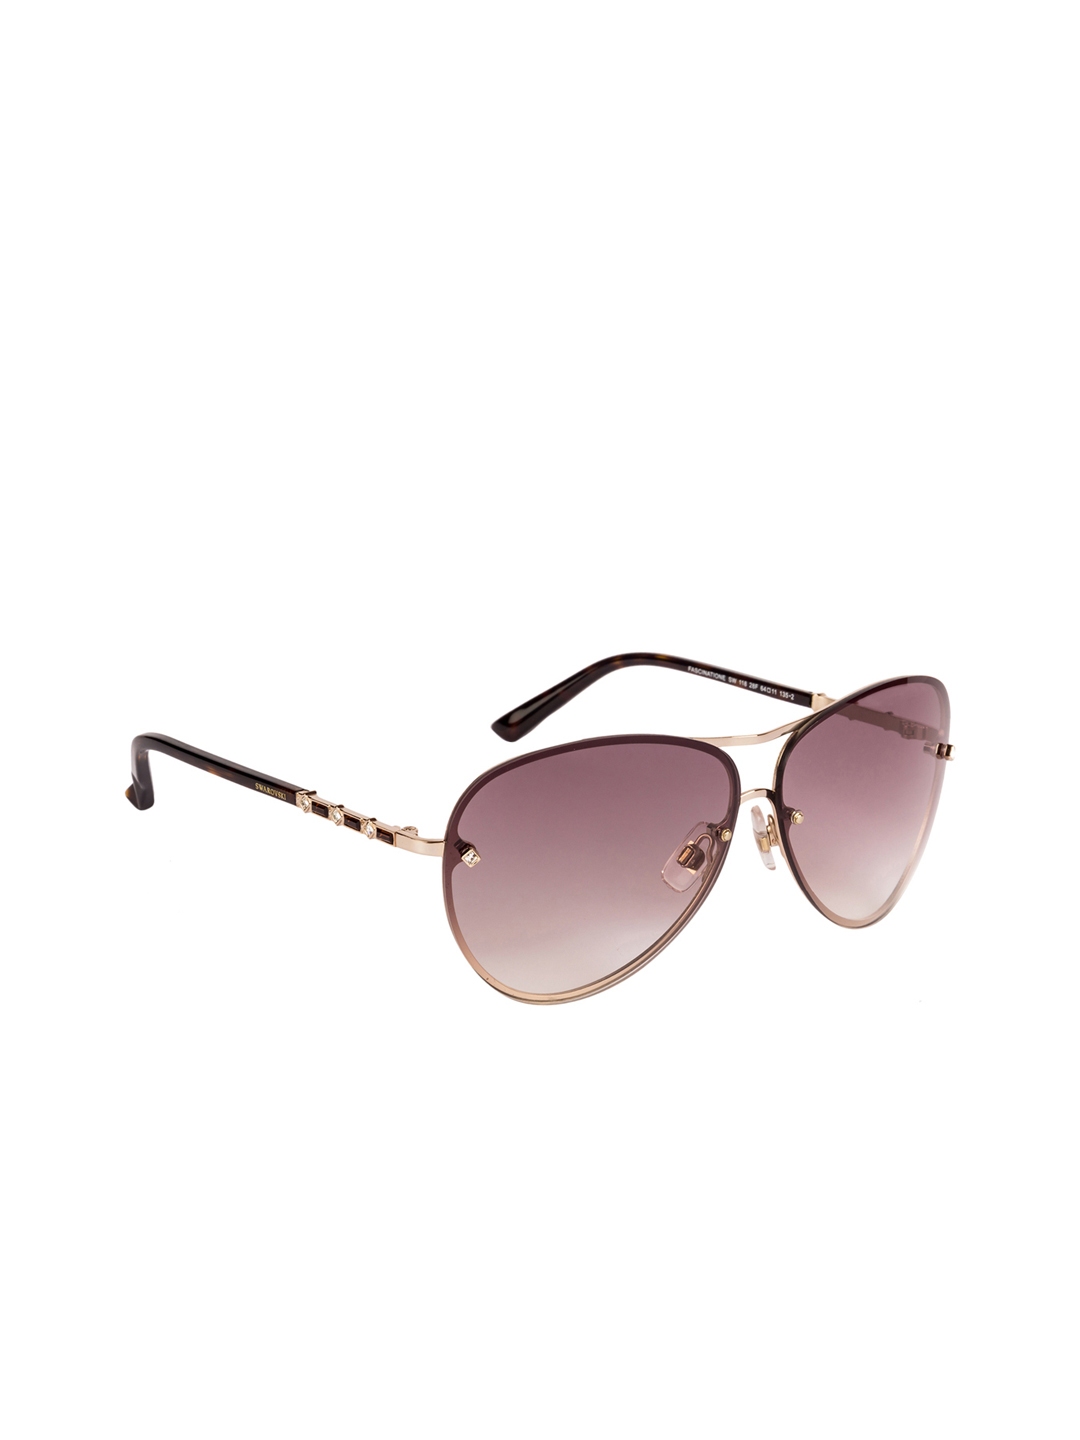 Buy SWAROVSKI Women Aviator Sunglasses SK0118 64 28F - Sunglasses for